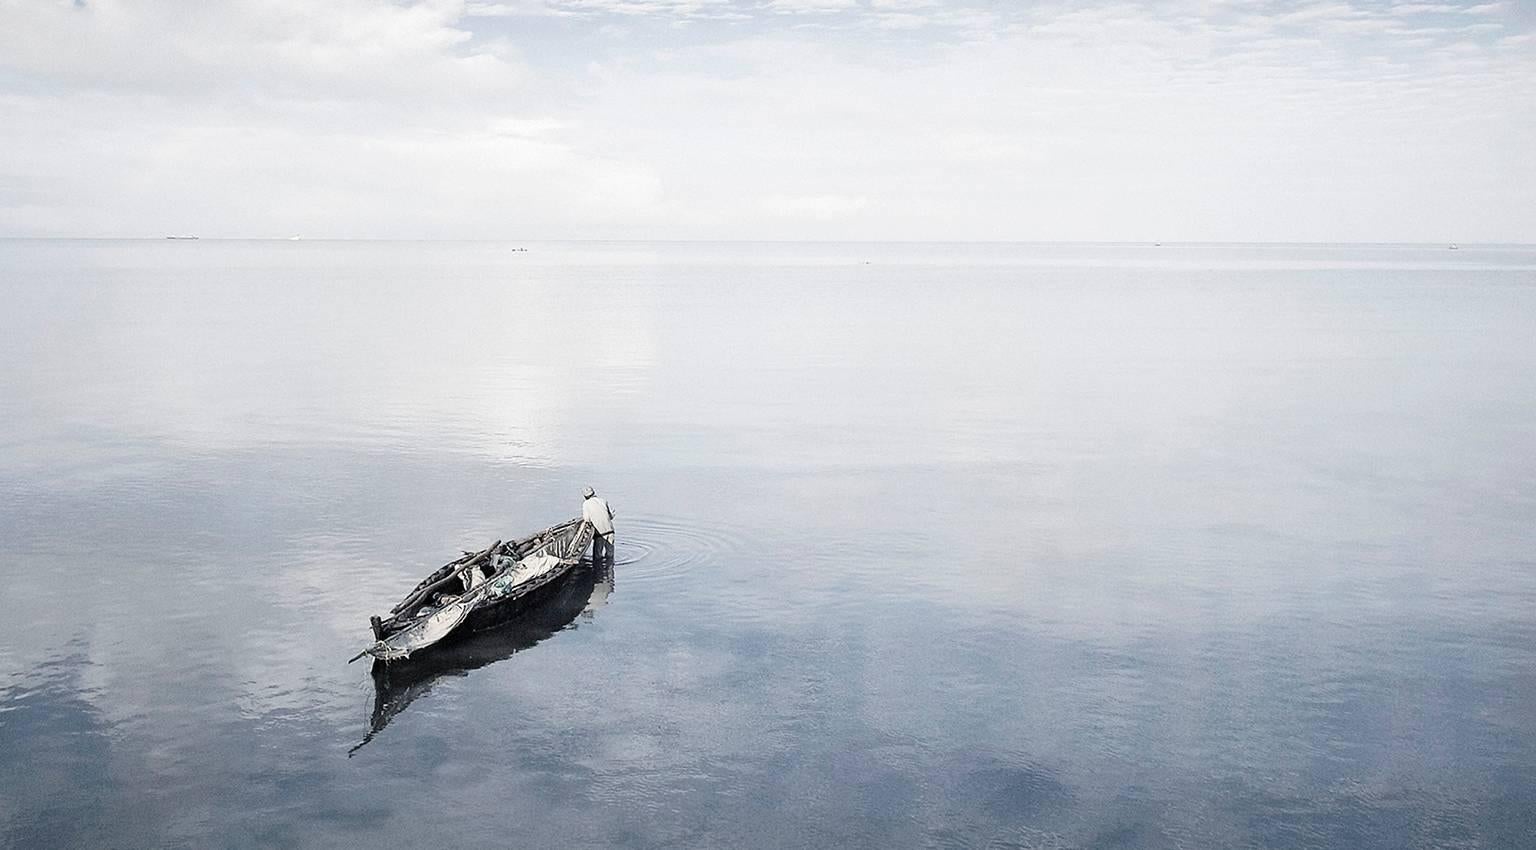 Man and Boat, Zanzibar - Photograph by Chris Gordaneer